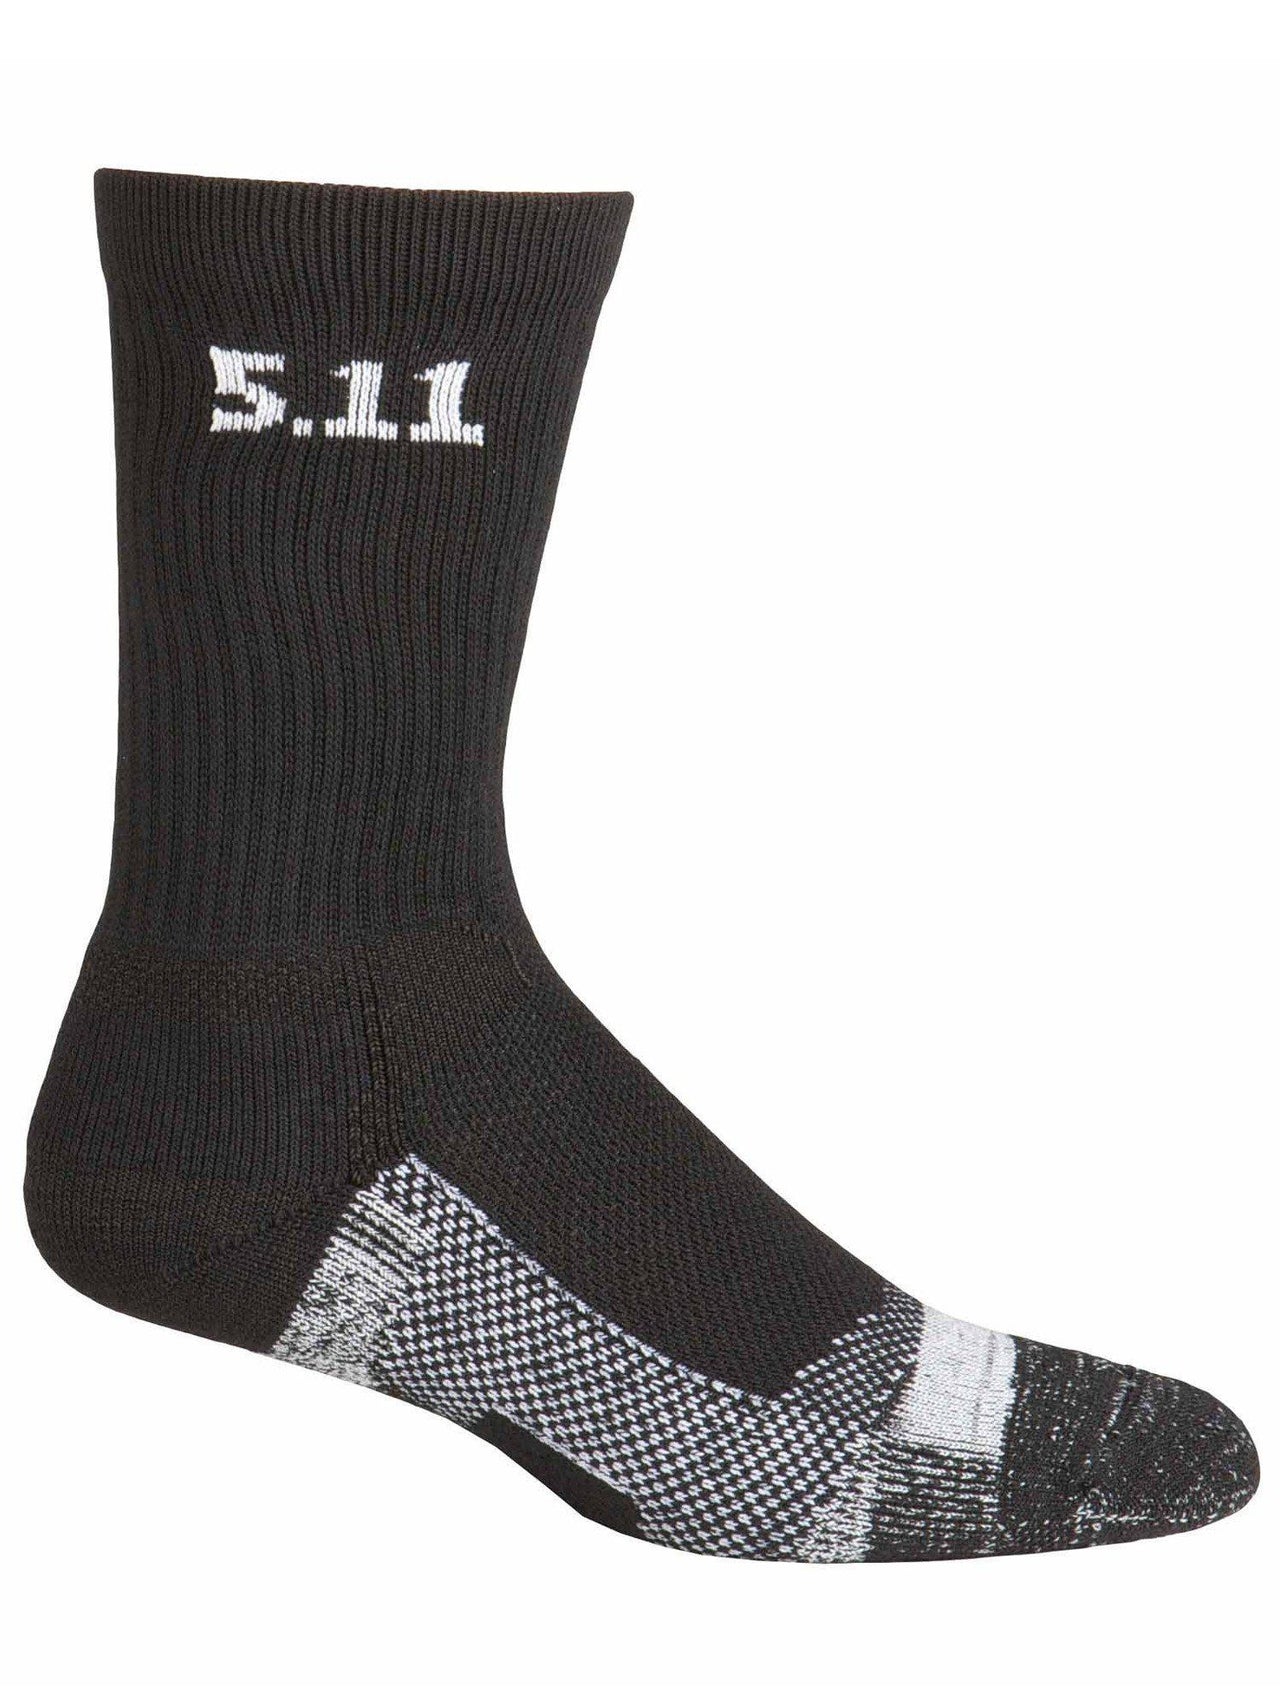 5.11 Tactical Level 1 6" Sock - Black - TacSource